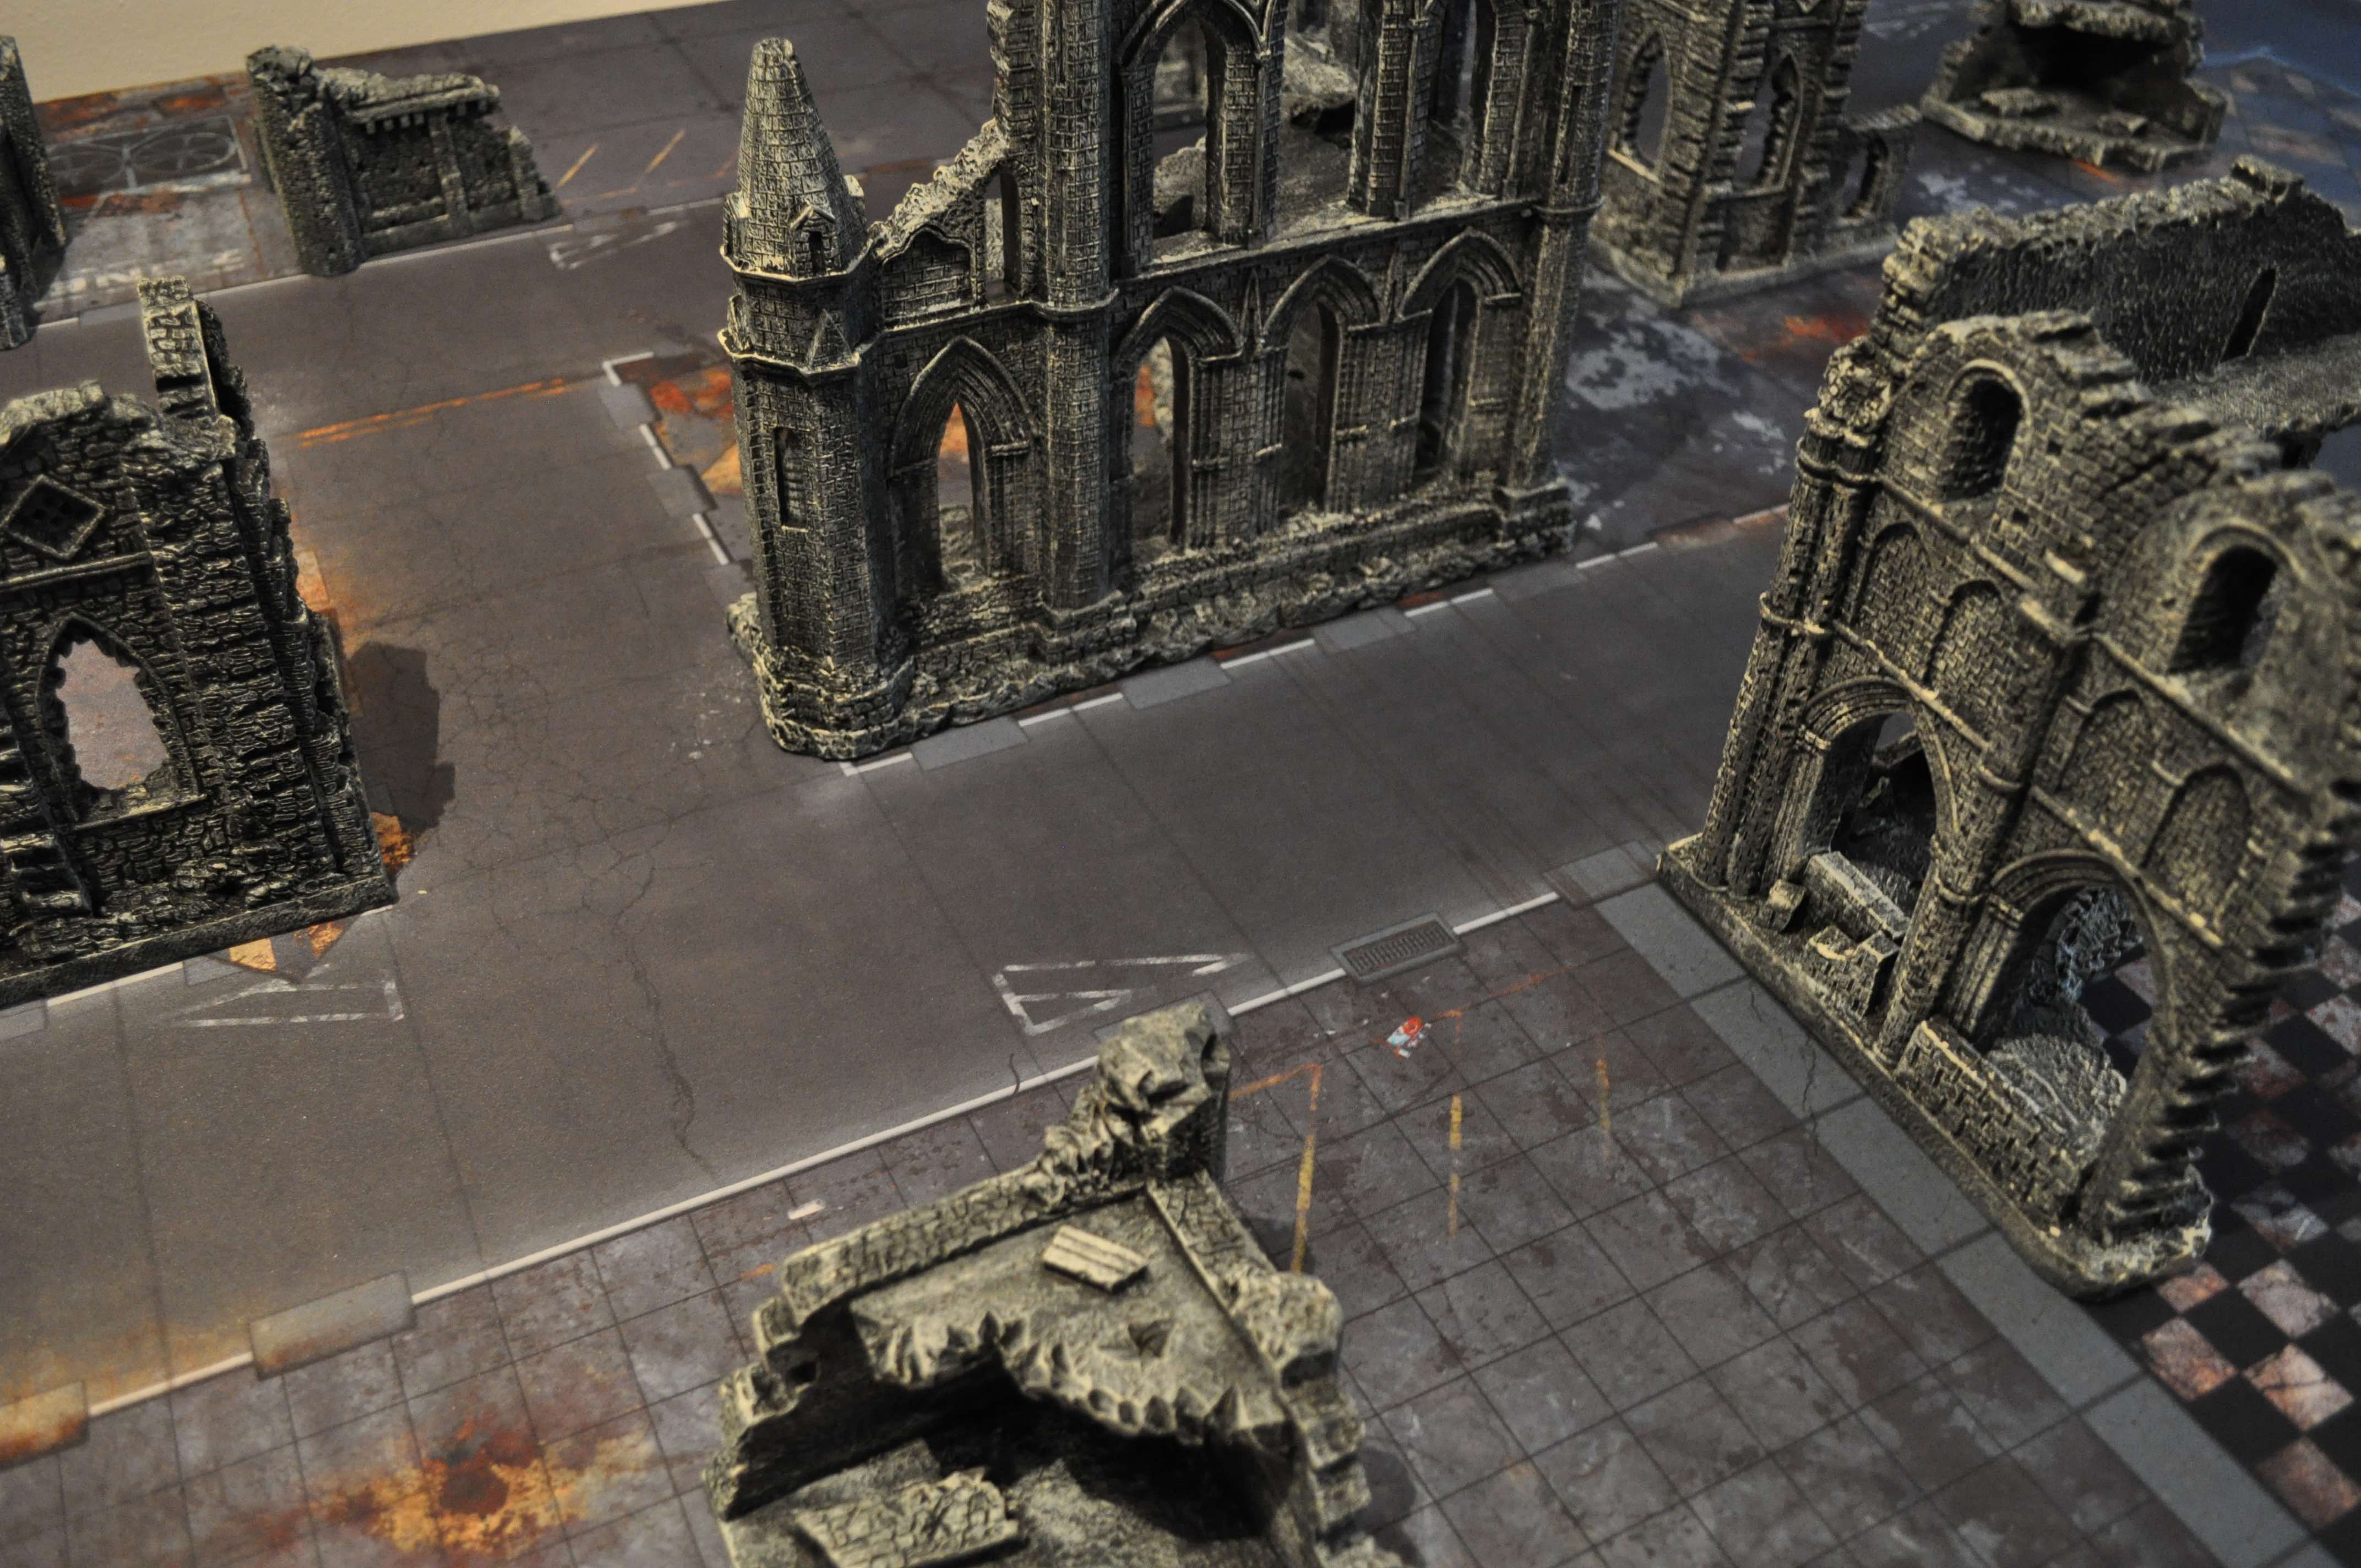 Gothic Ruins terrain set on 6x4 Quarantine Zone battle mat